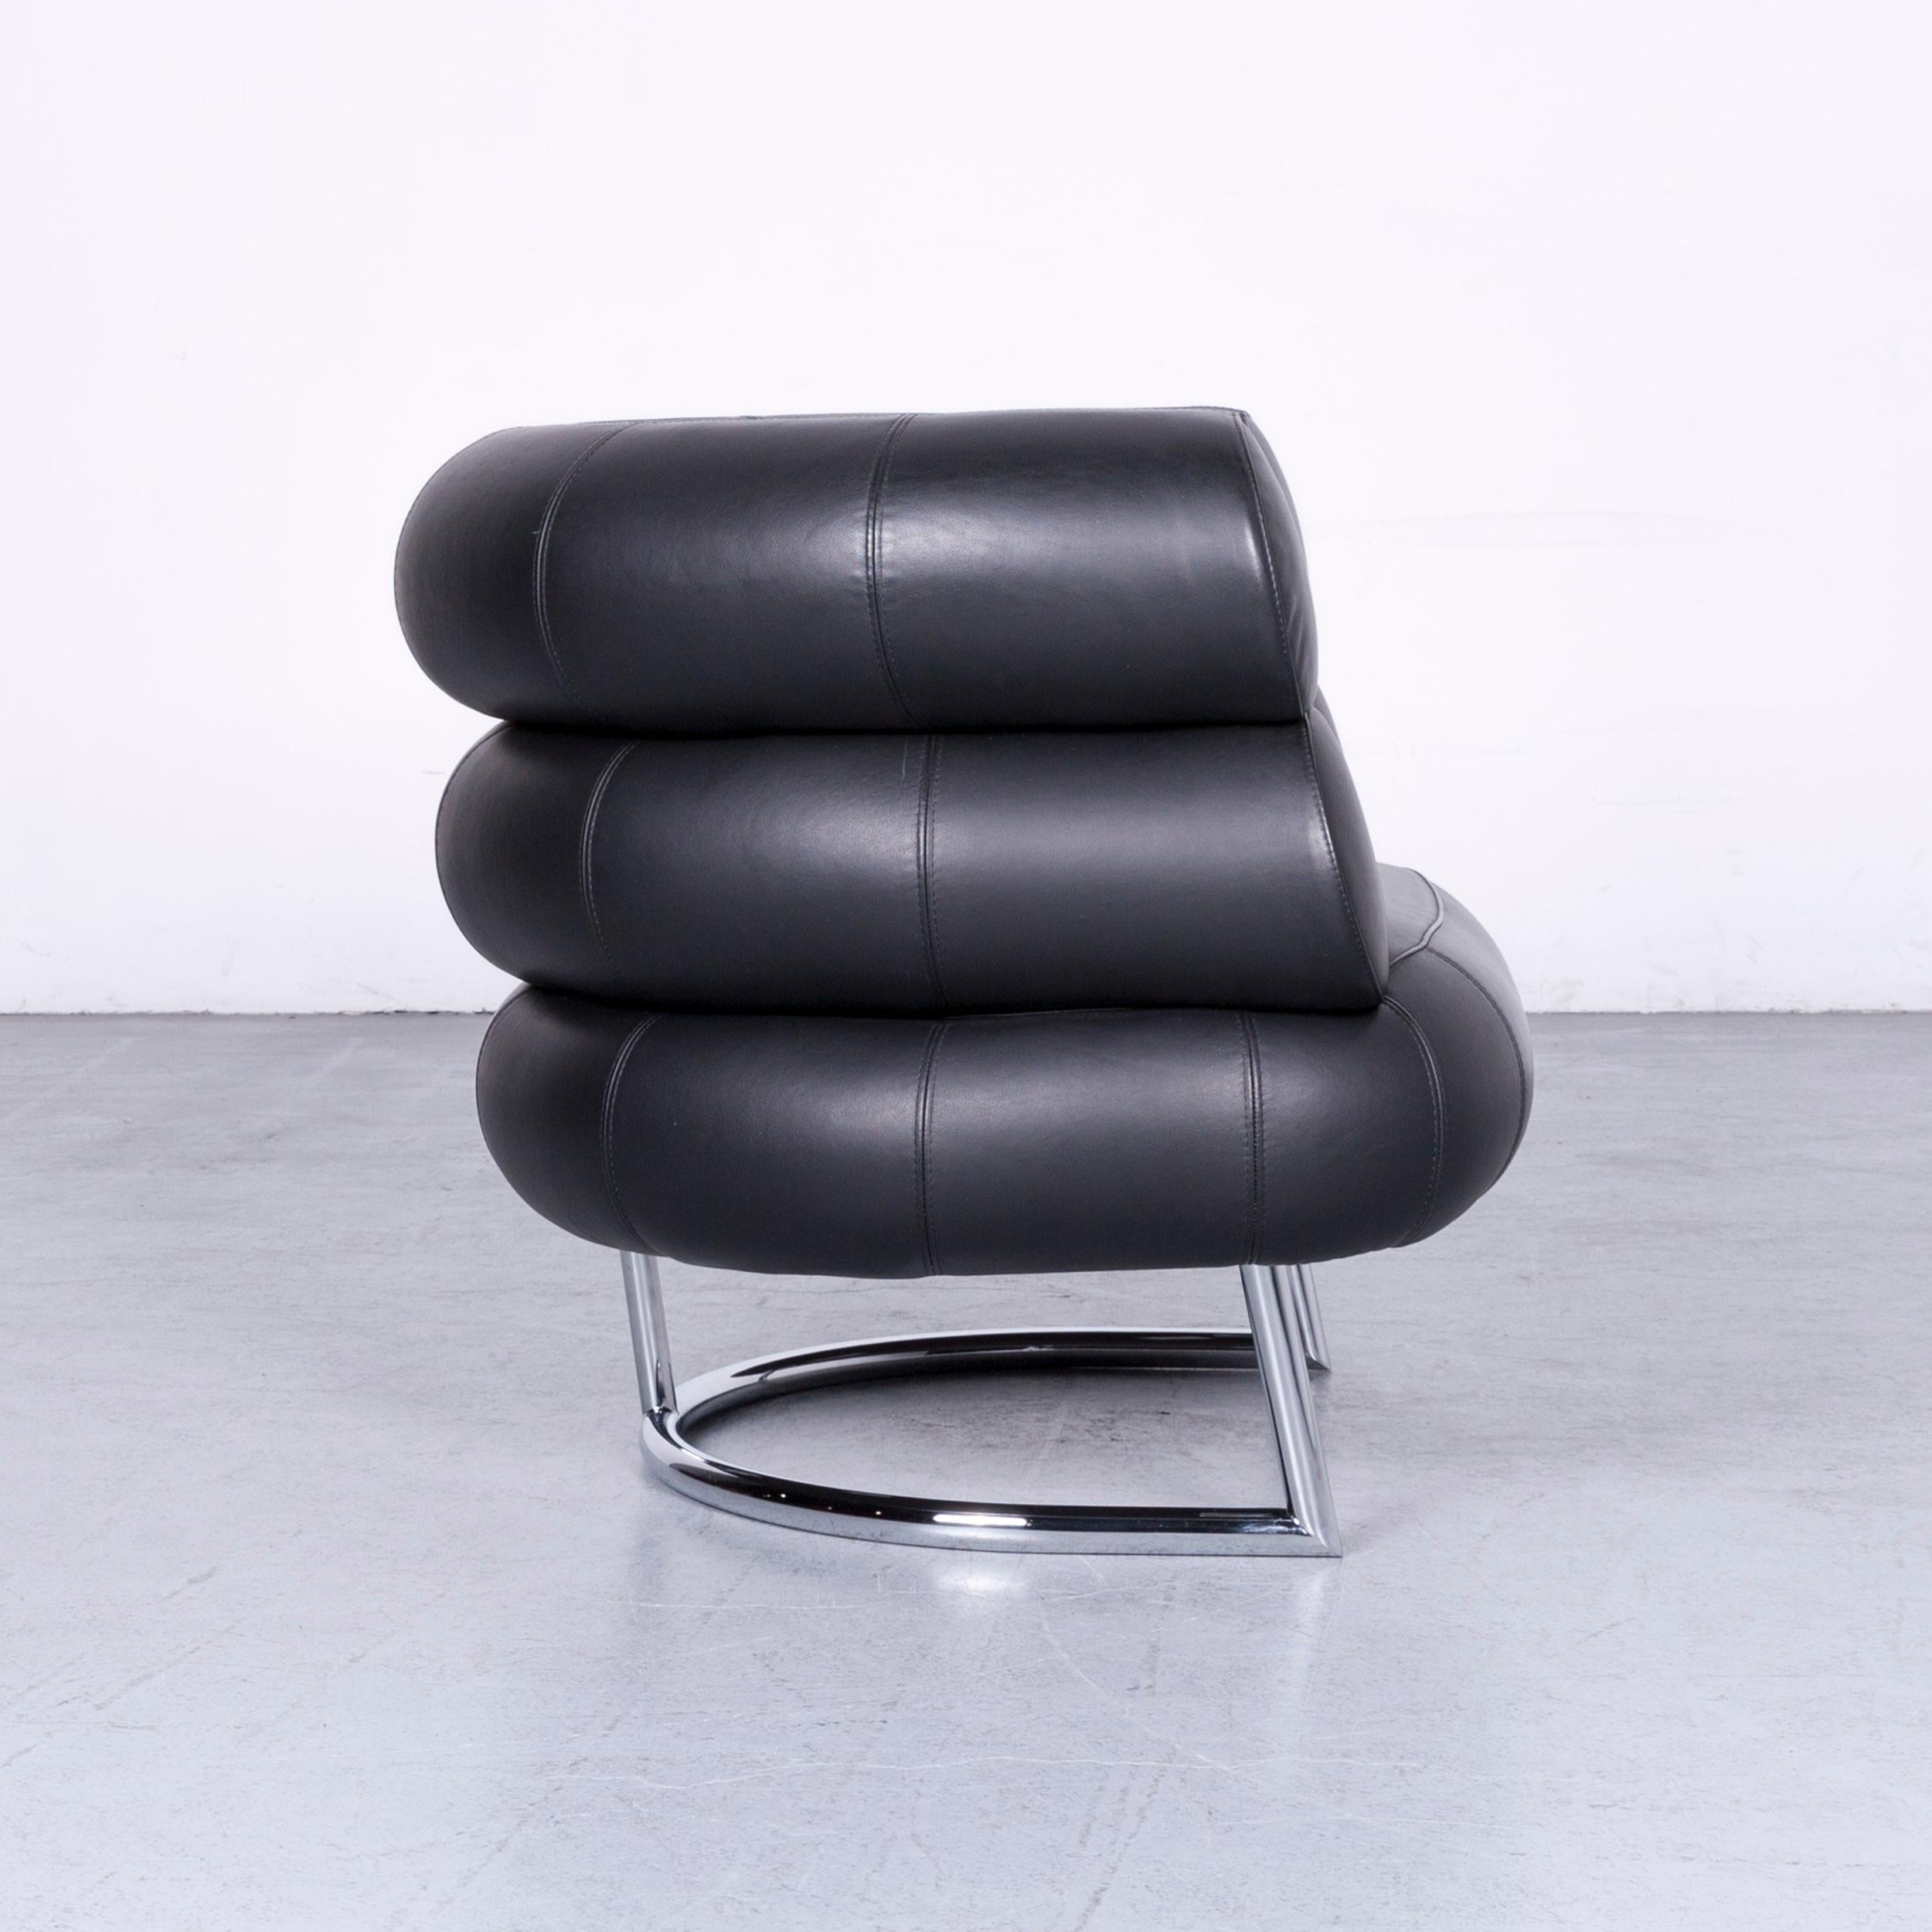 Modern ClassiCon Bibendum Chair Designer Leather Armchair Black Genuine Leather Chair For Sale